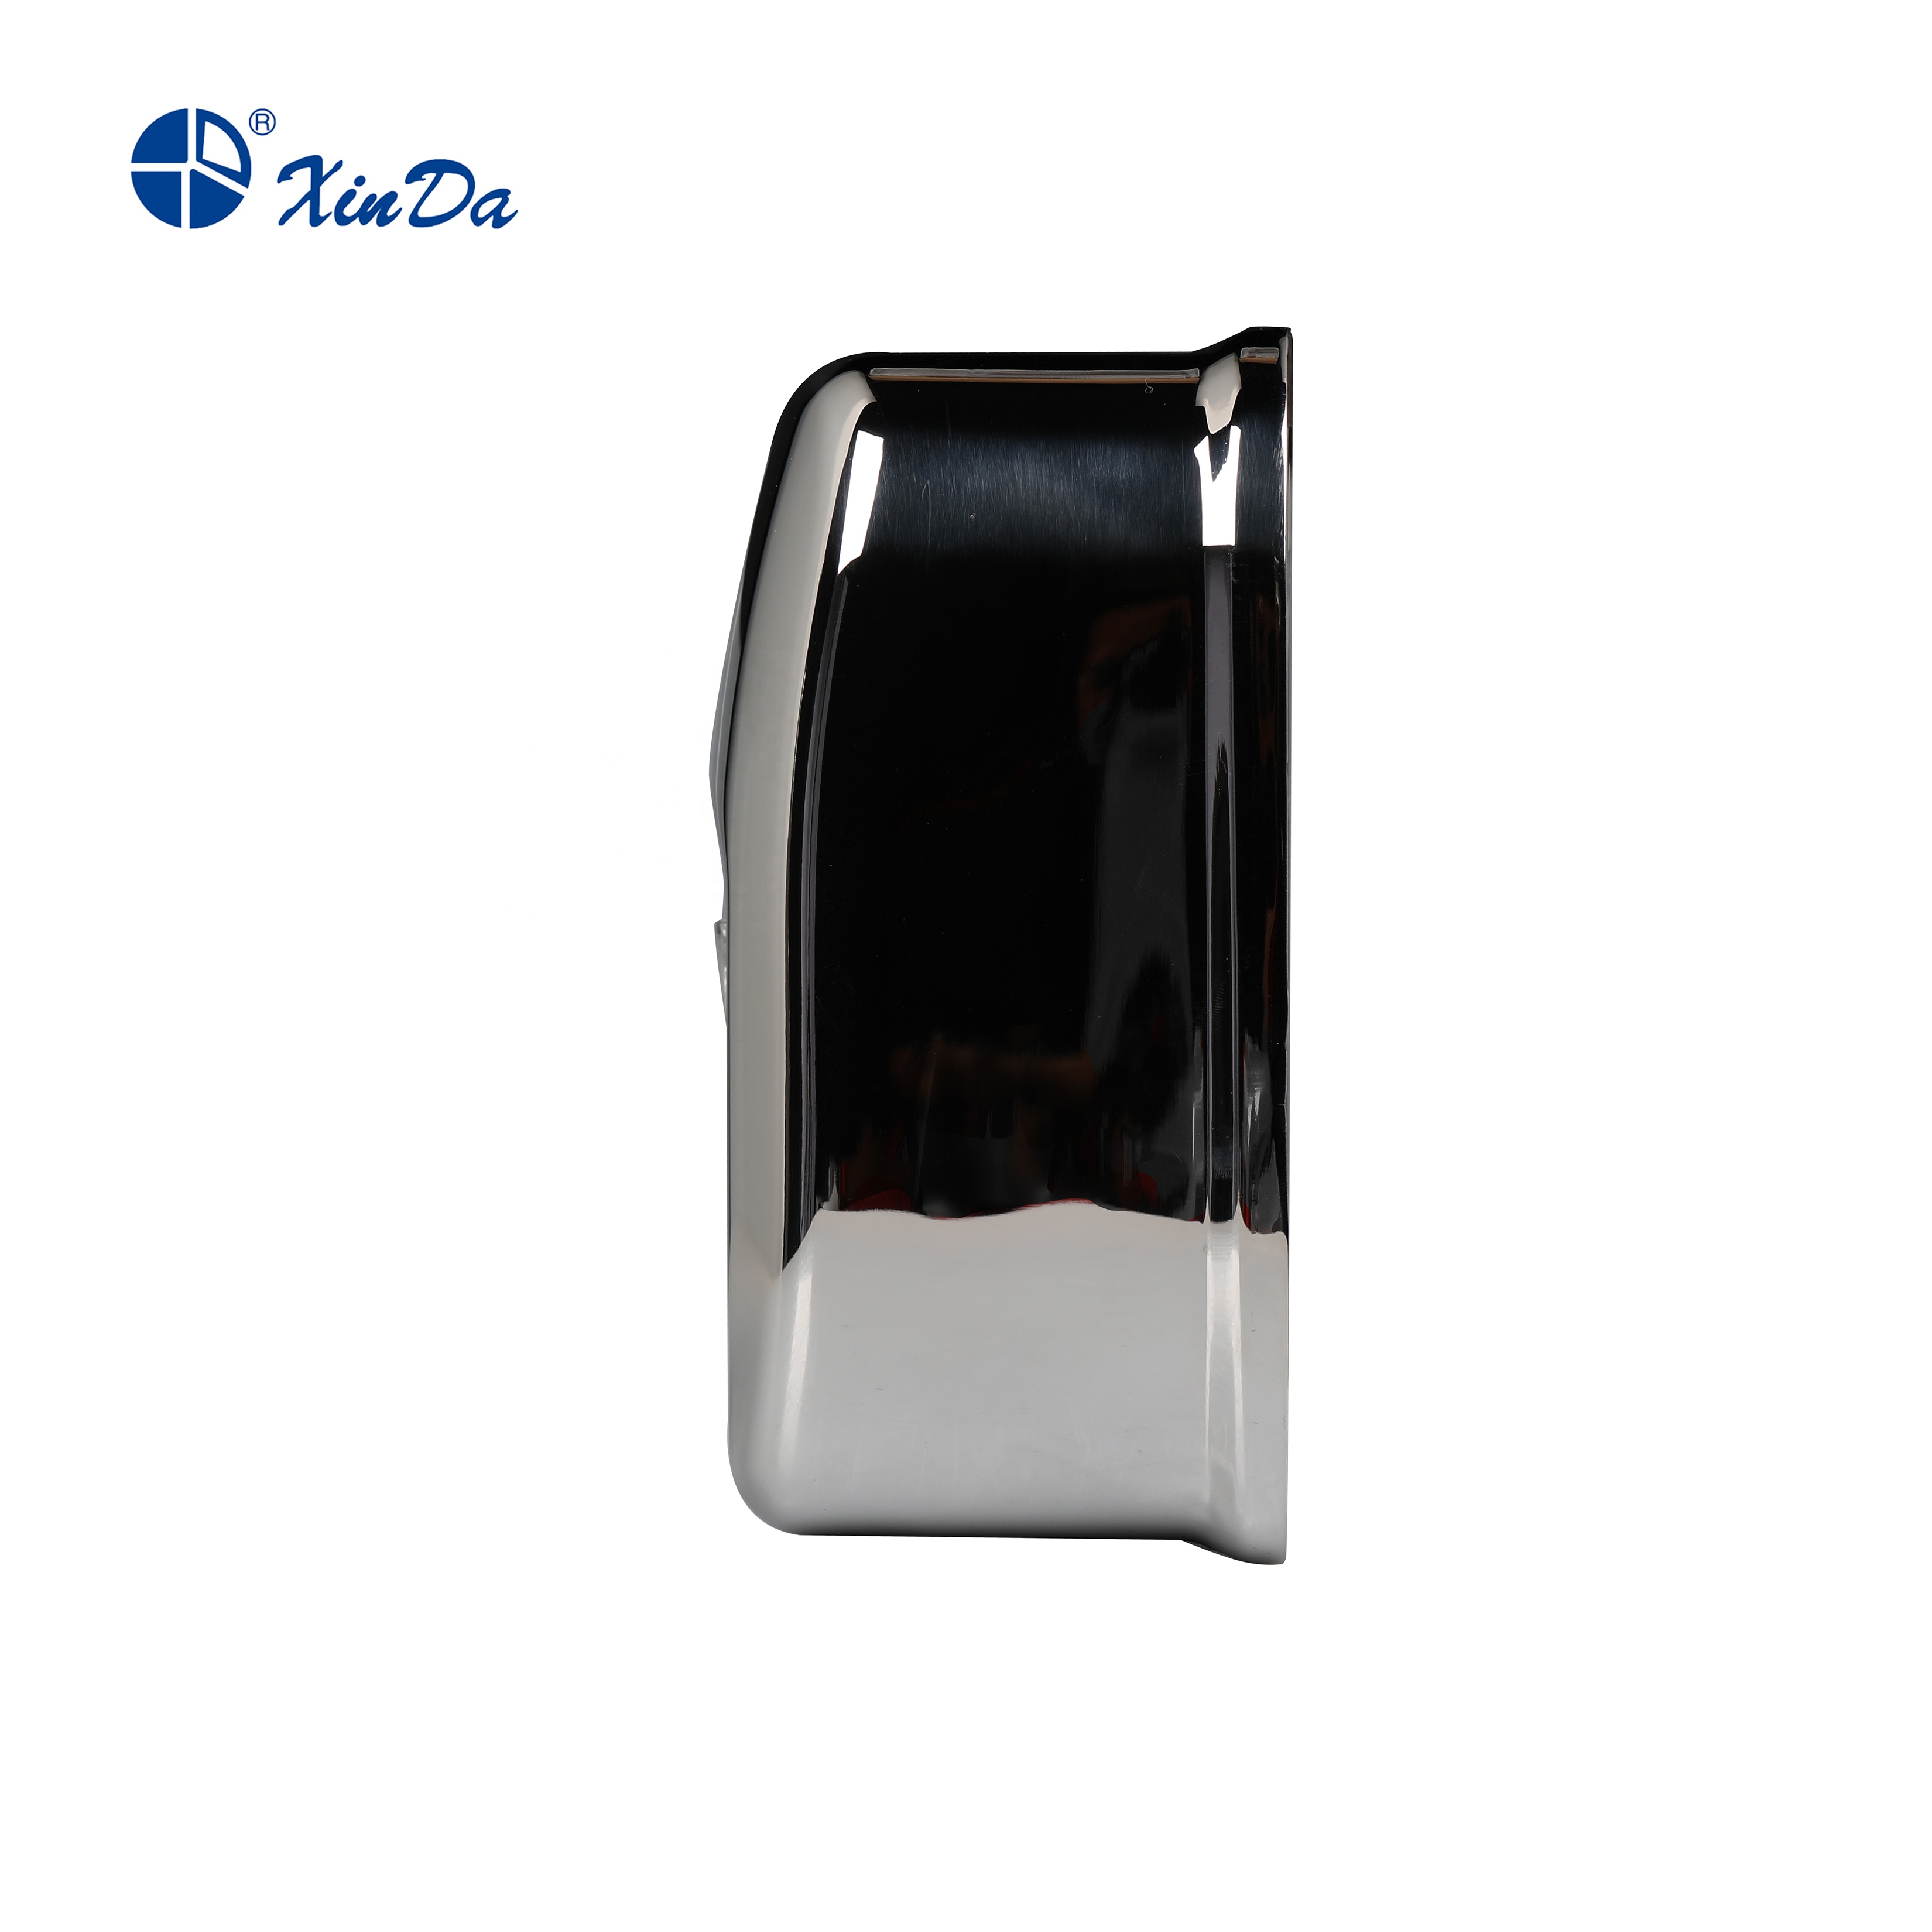 تهویه صابون ZYQ 120 Metal Automatic Soap Dispenser Sanitize Wall Mounted with Key-lock Protection